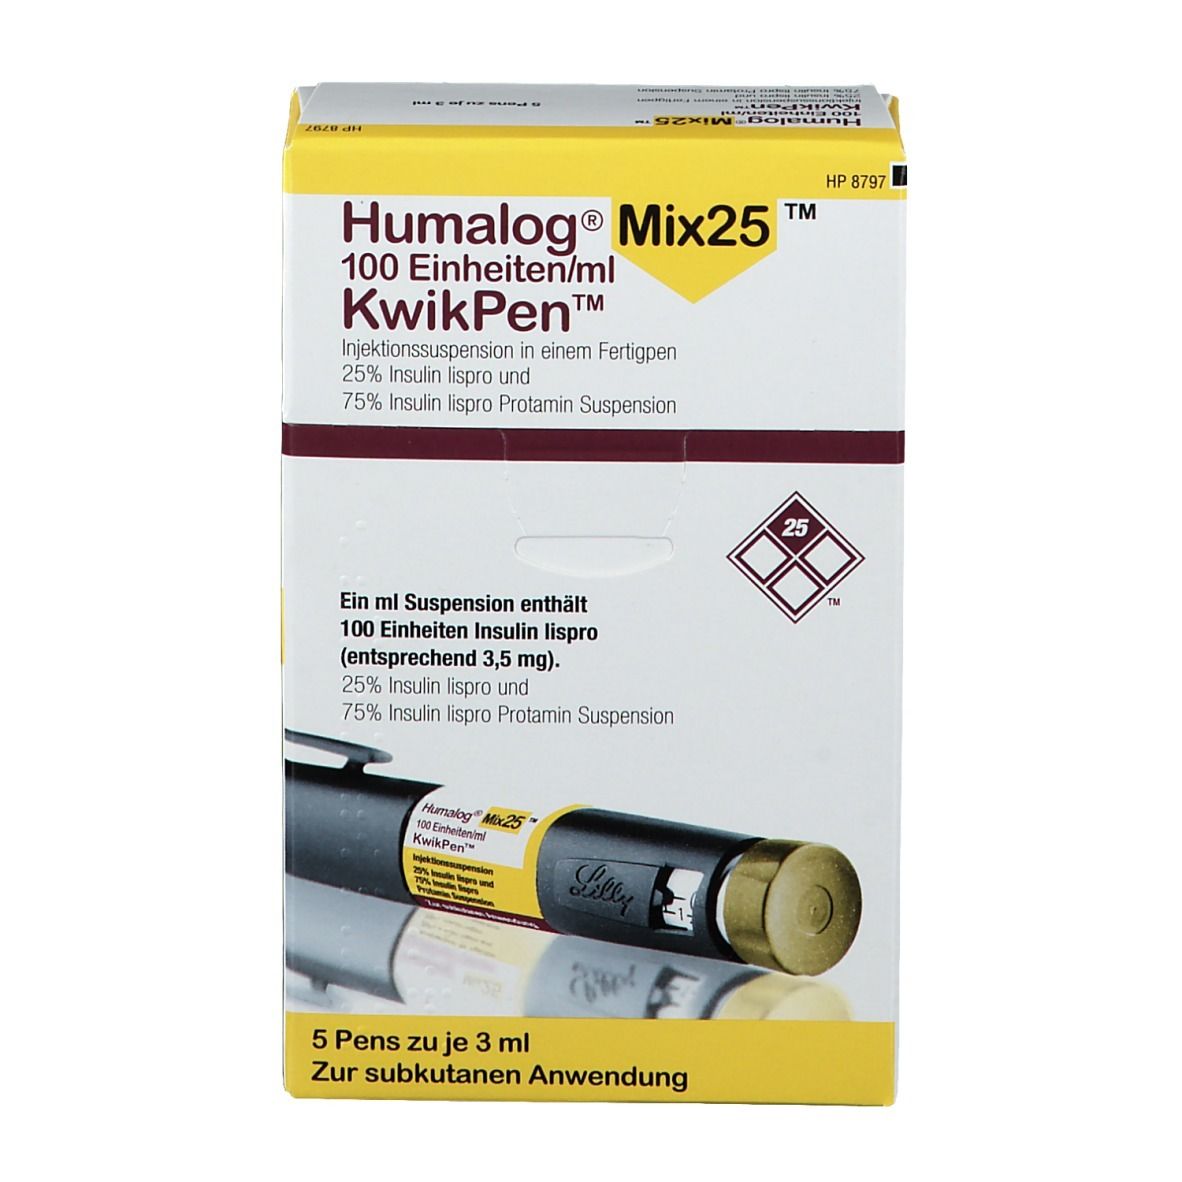 Humalog® Mix25™ 100 Einheiten/ml KwikPen™